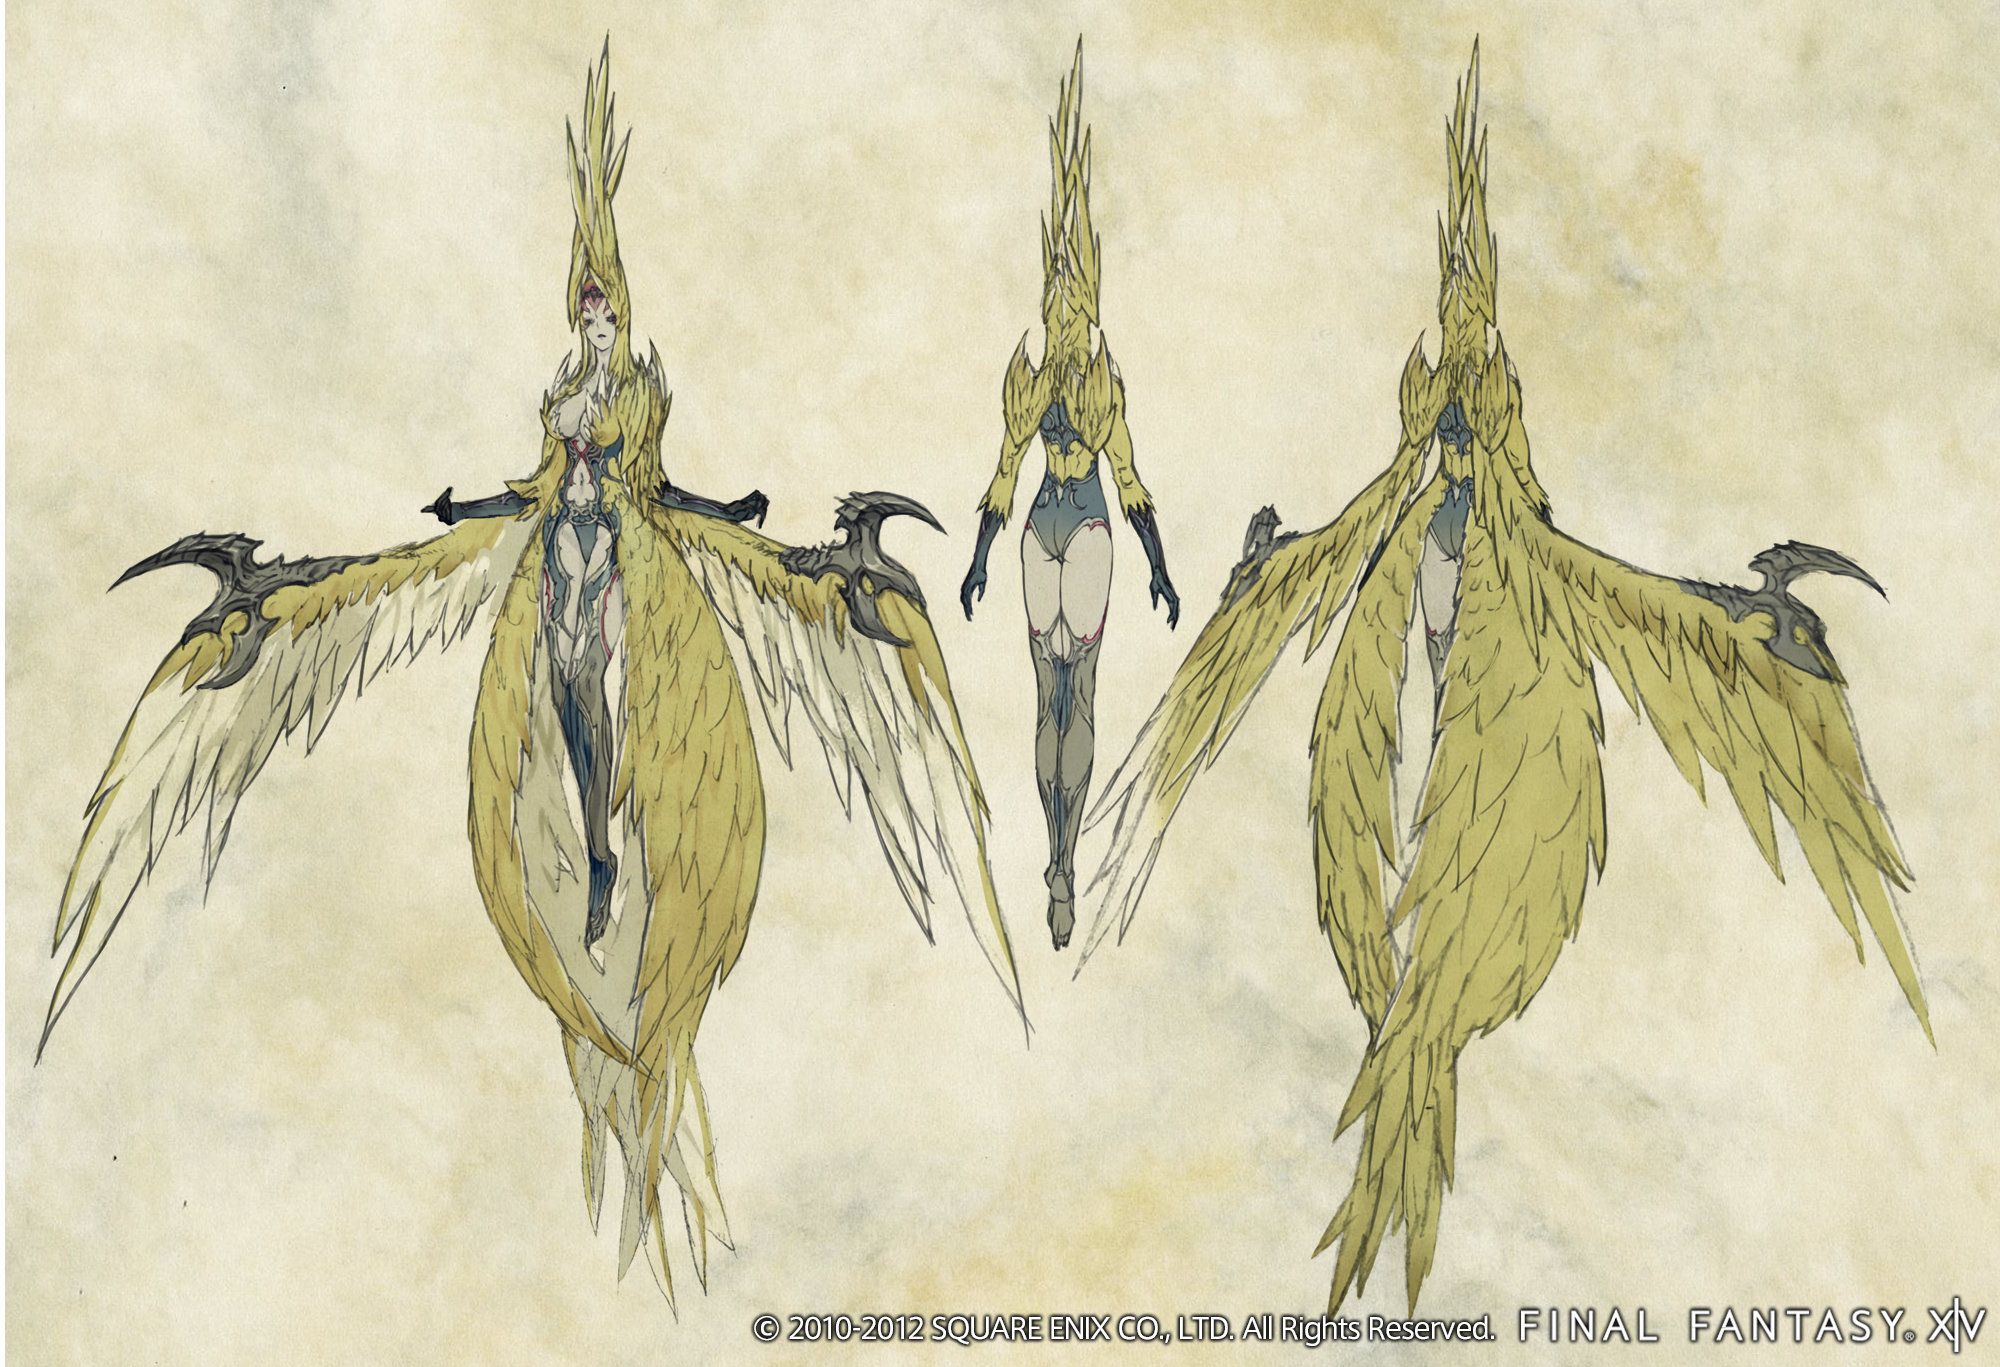 Final Fantasy XIV: A Realm Reborn Computer Wallpapers, Desktop ...